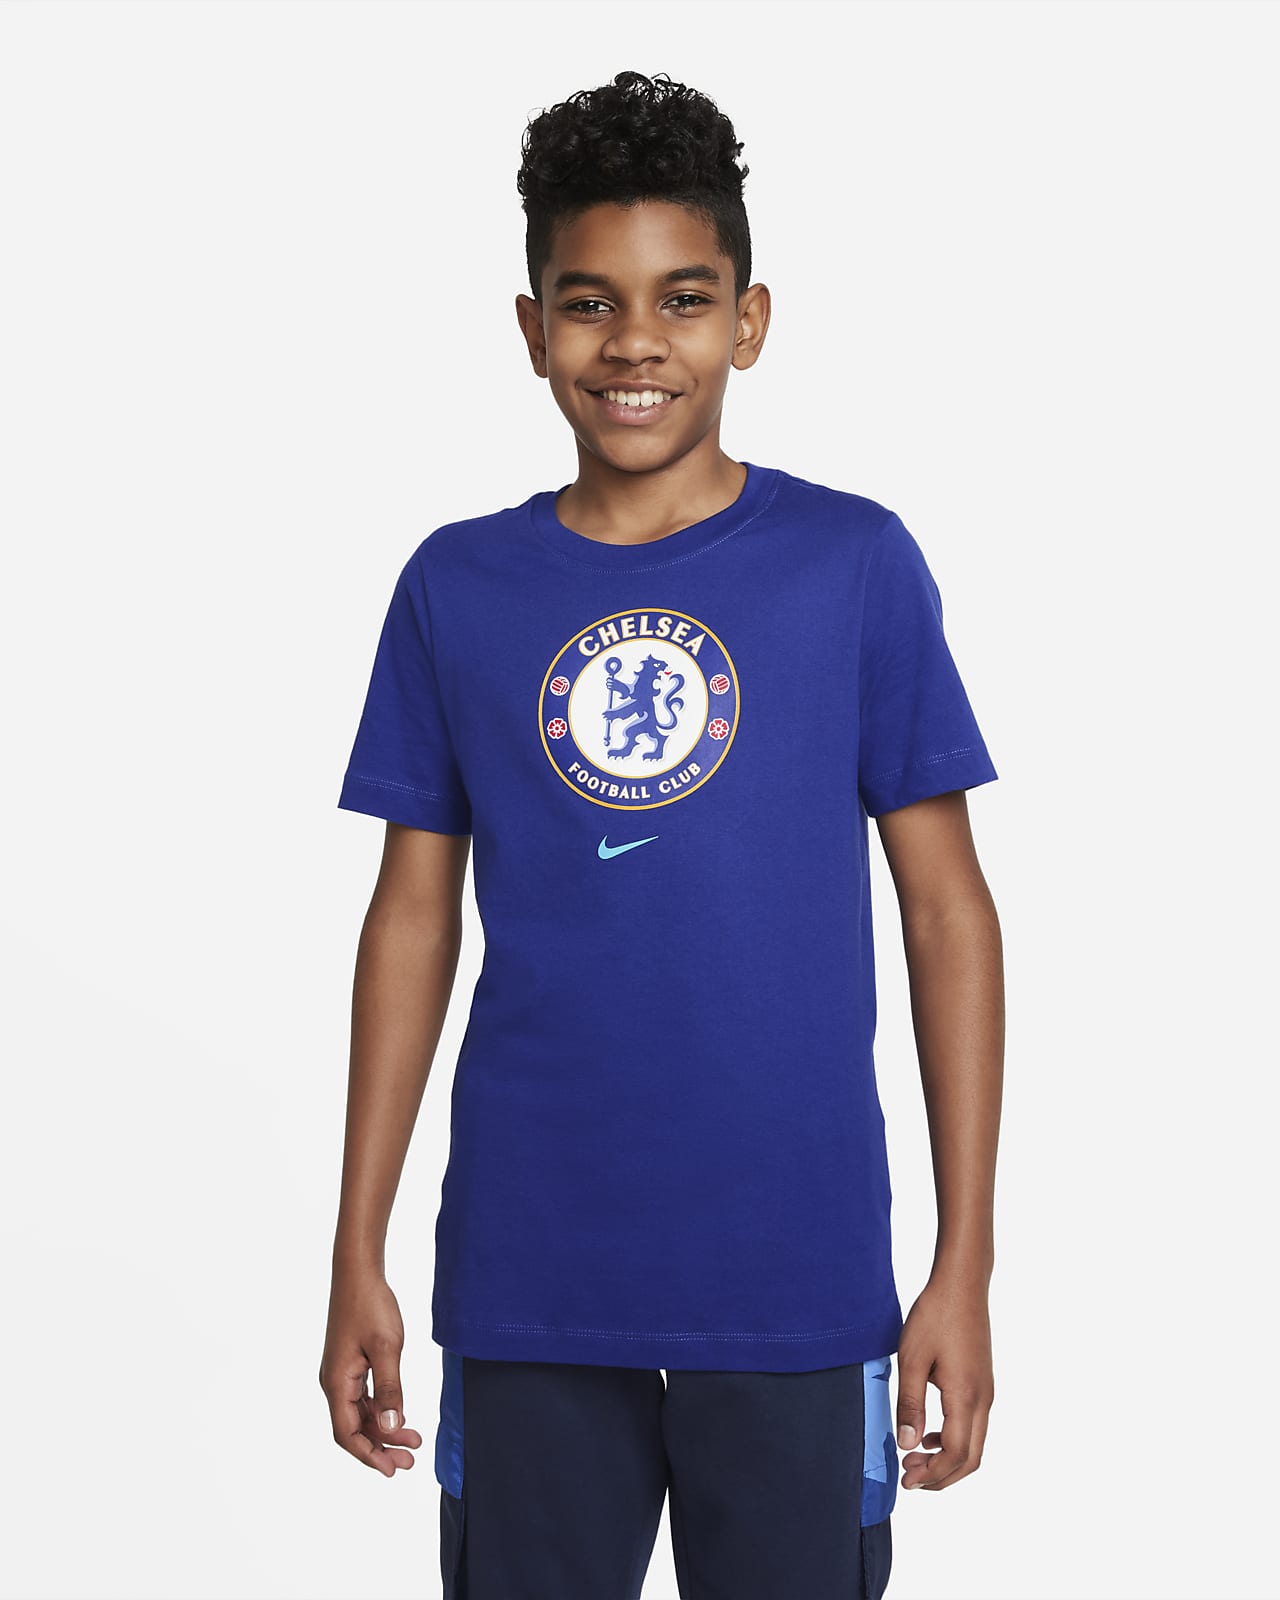 Chelsea F.C. Crest Older Kids' Football T-Shirt